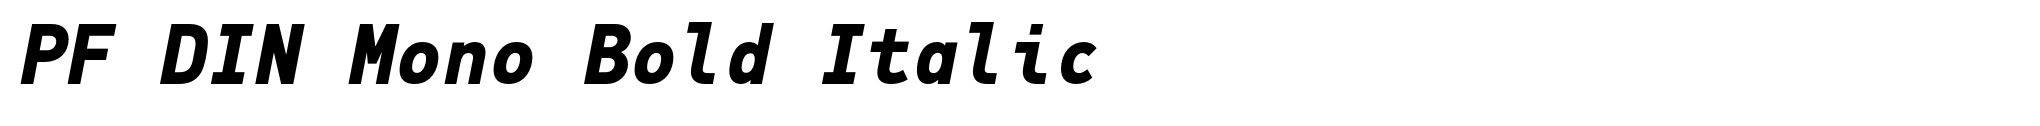 PF DIN Mono Bold Italic image